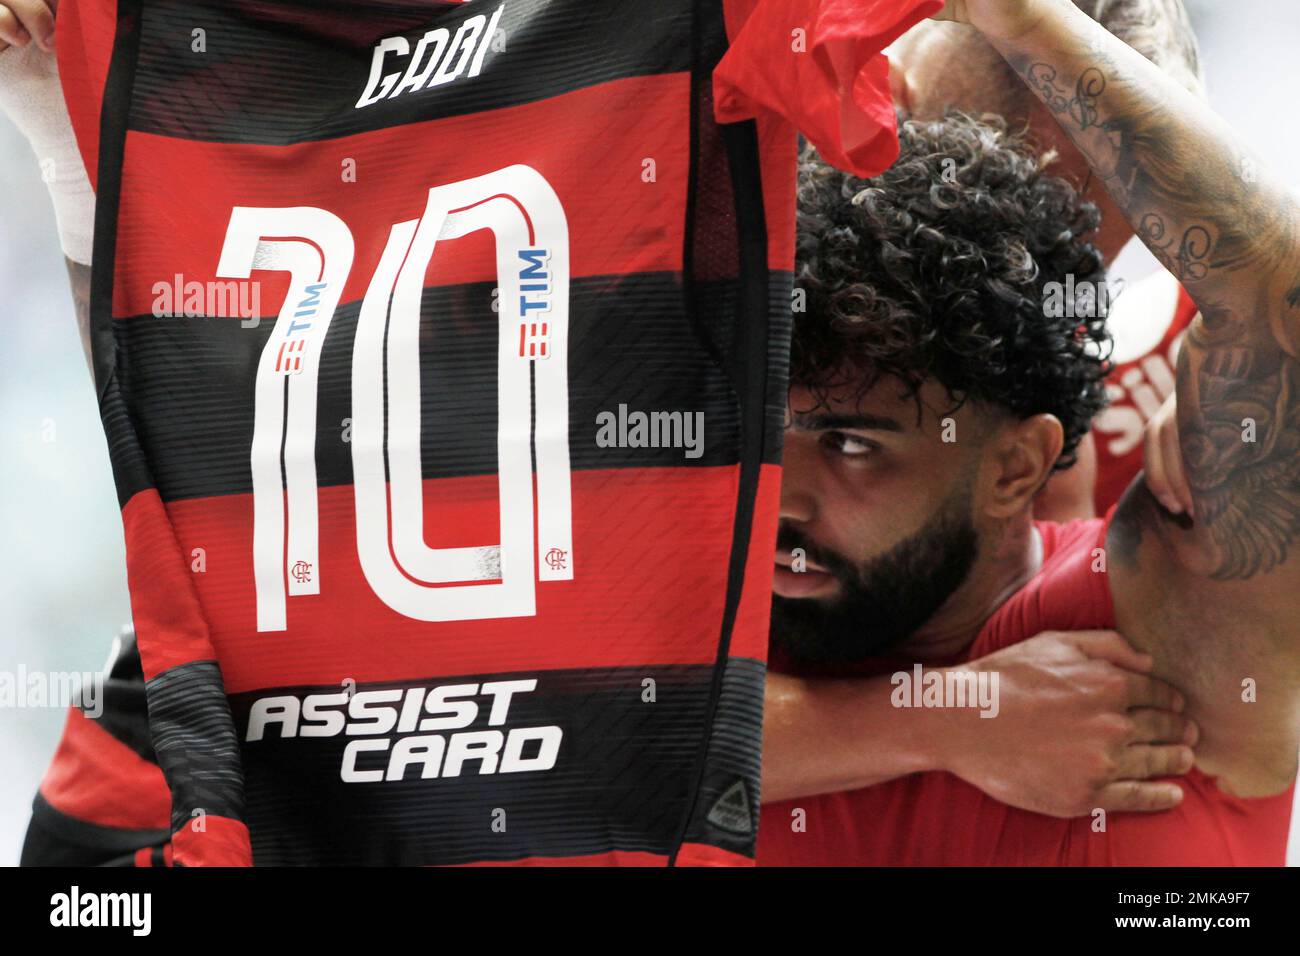 Gabriel Barbosa of Flamengo heads the ball during a Brasileirao